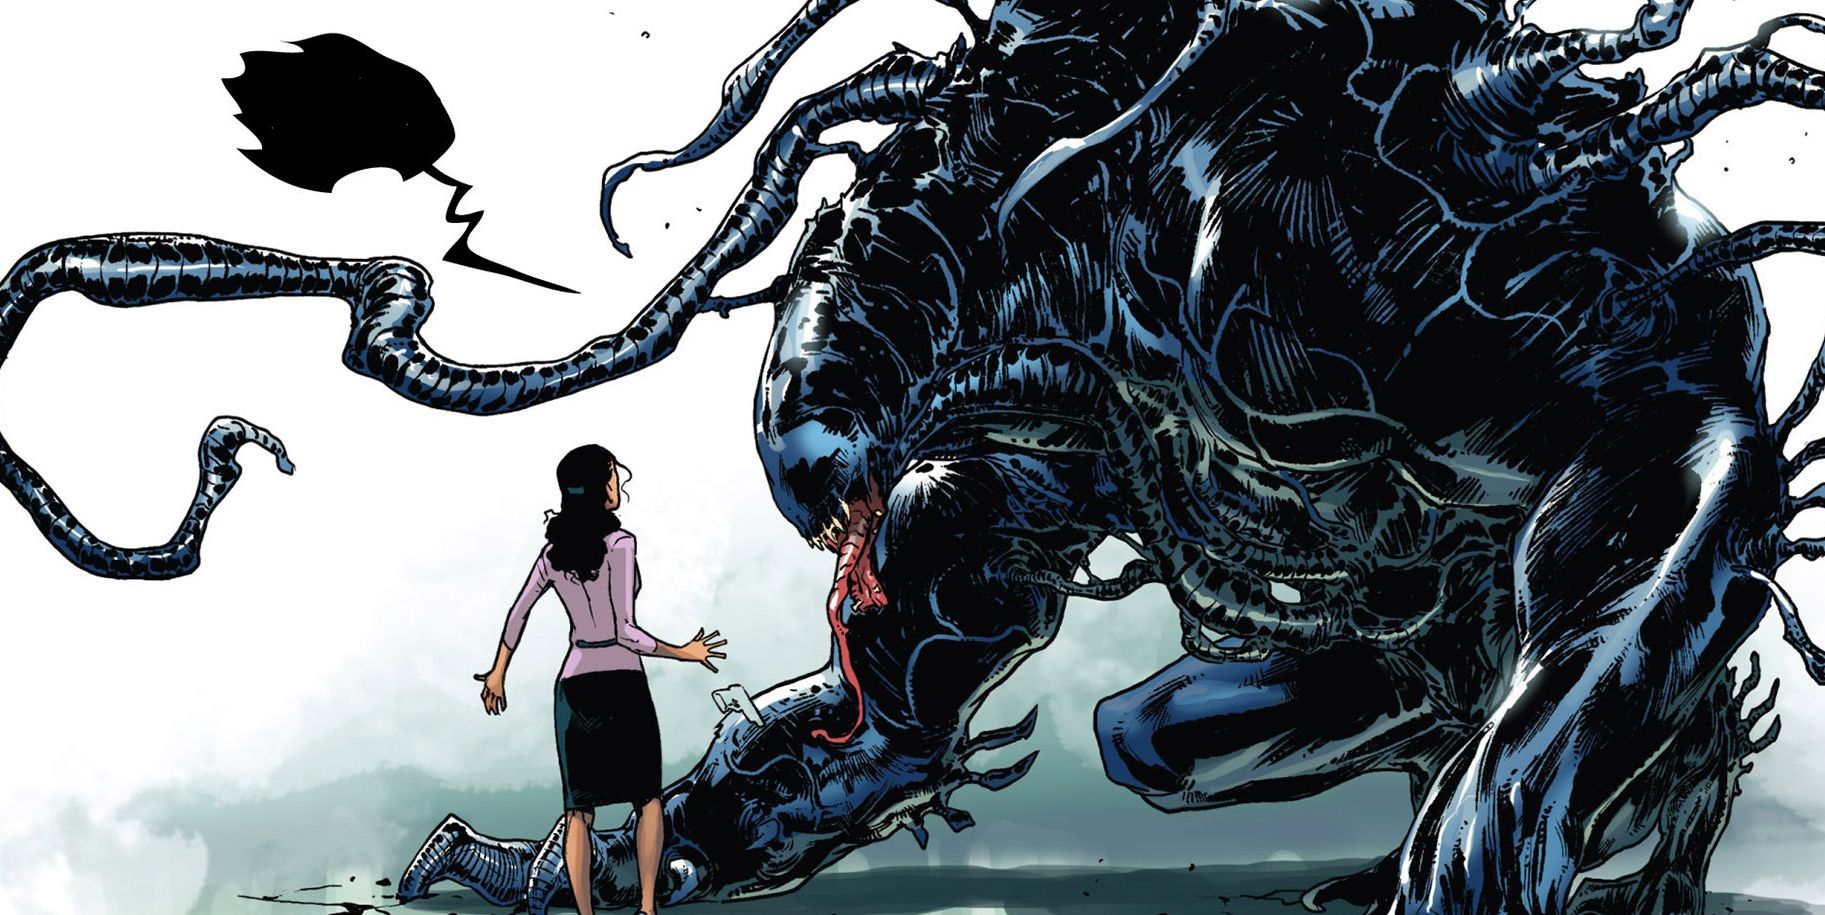 While Eddie Brock was the original Venom in the Marvel Ultimate Universe, h...